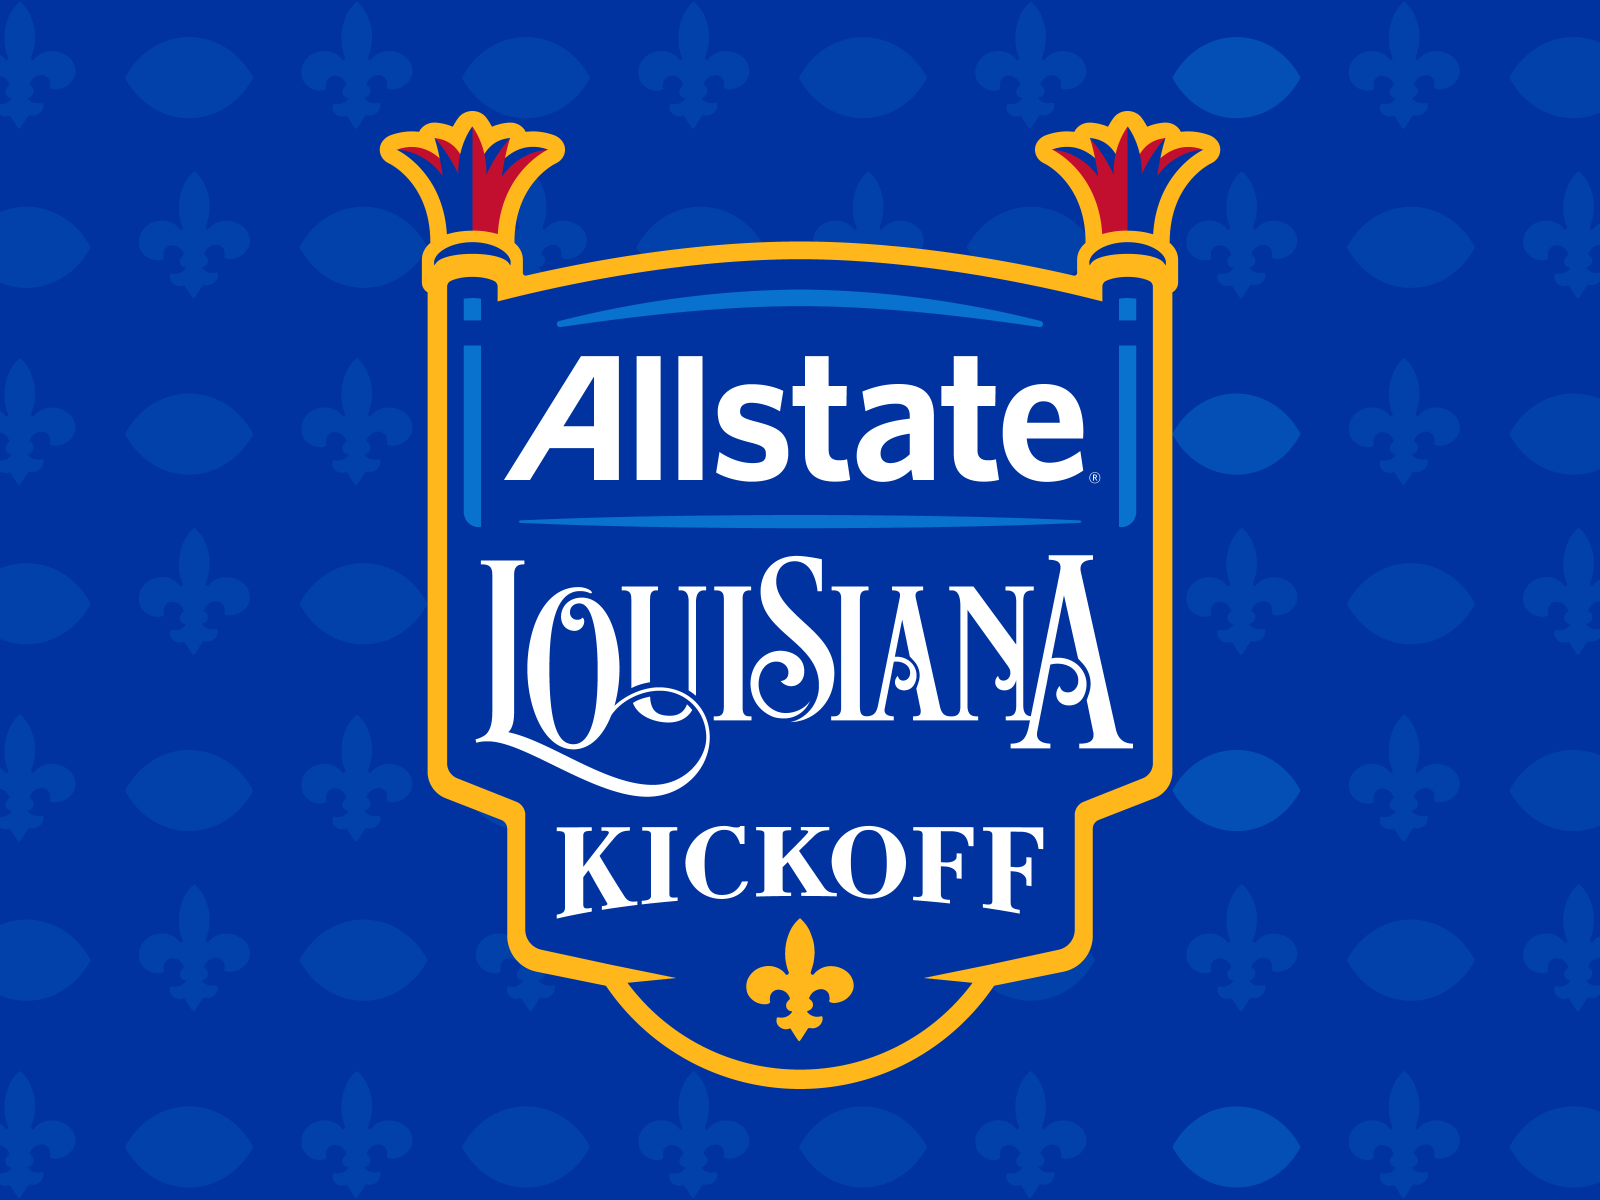 Allstate Louisiana Kickoff by Harley Creative on Dribbble